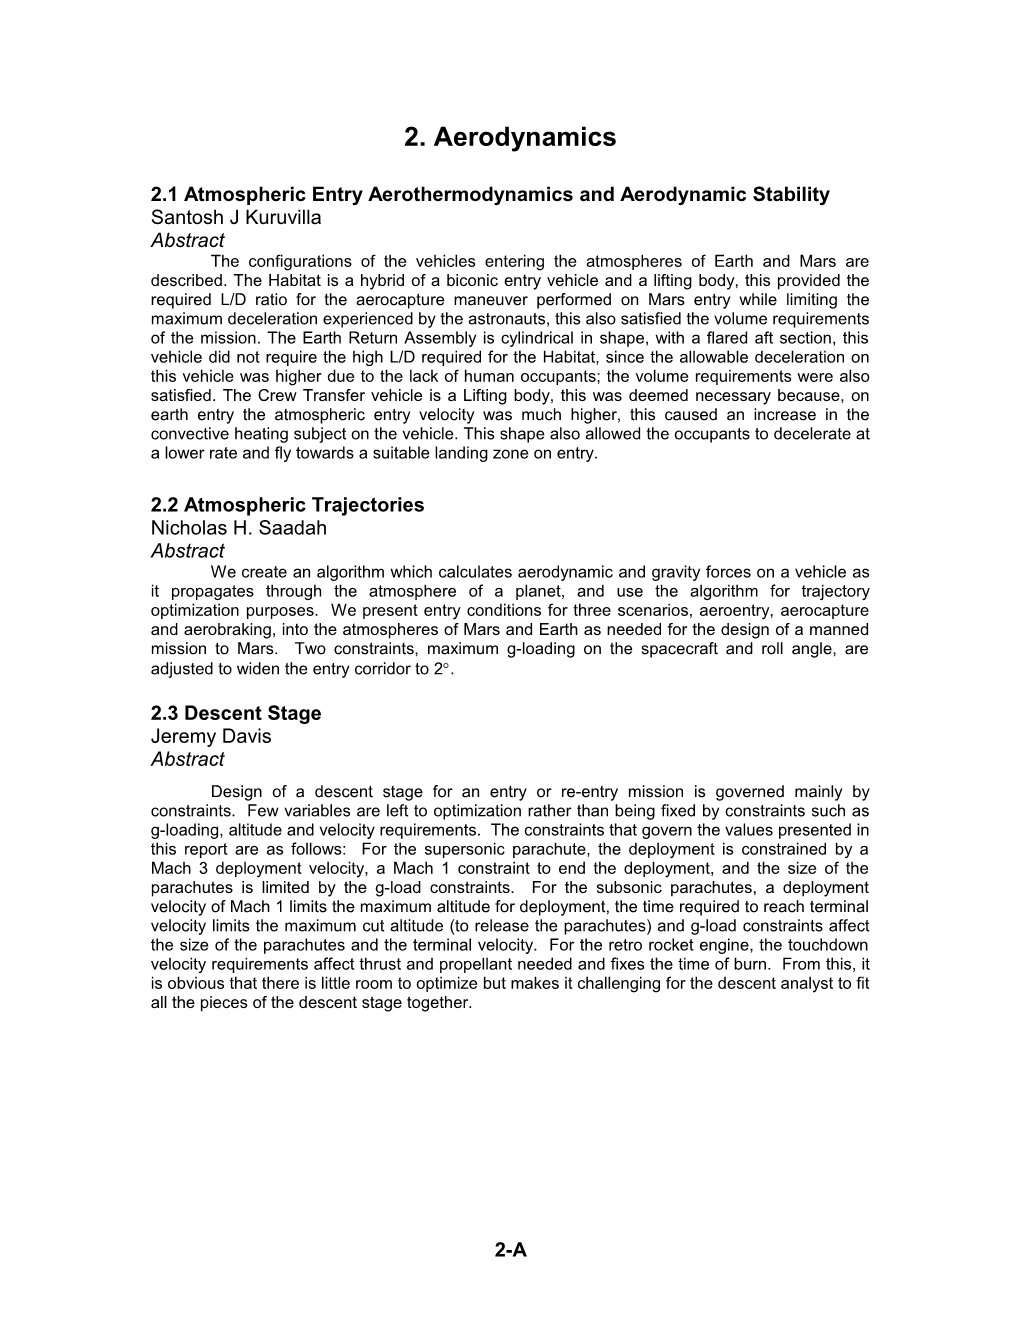 2.1 Atmospheric Entry Aerothermodynamics and Aerodynamic Stability